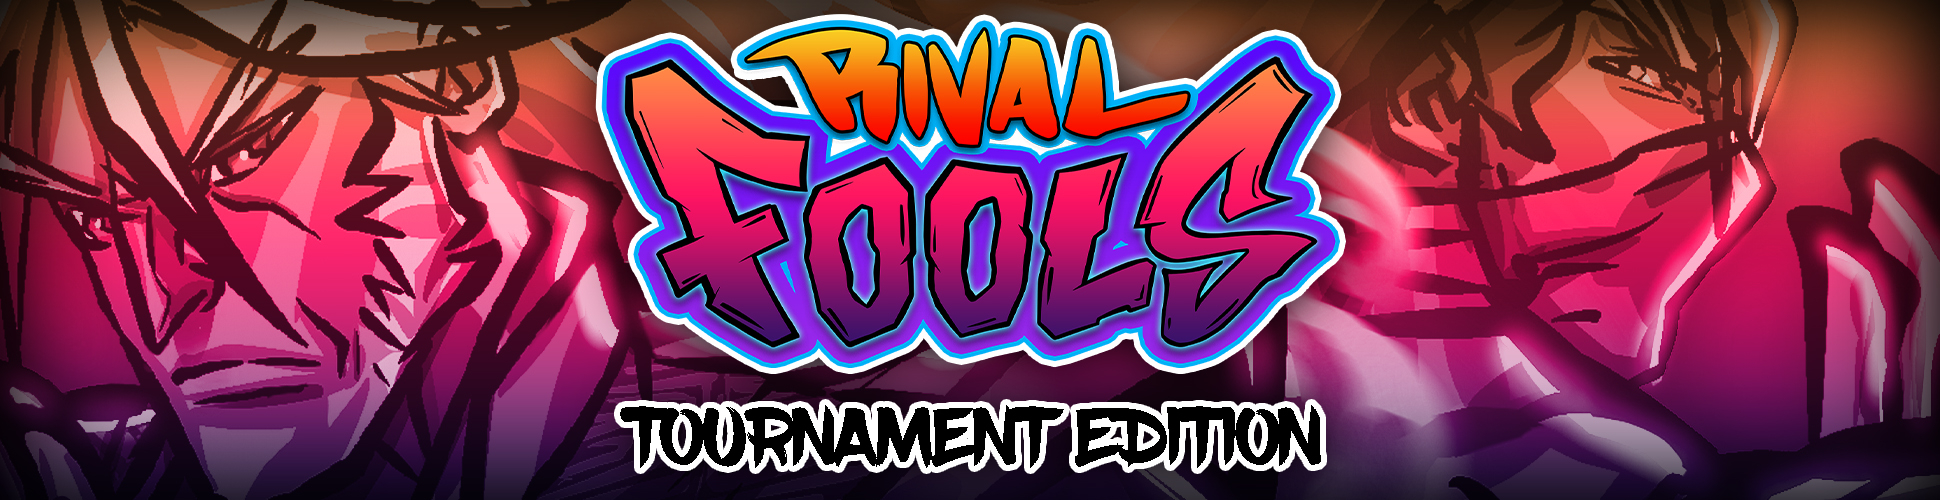 Rival Fools Tournament Edition 